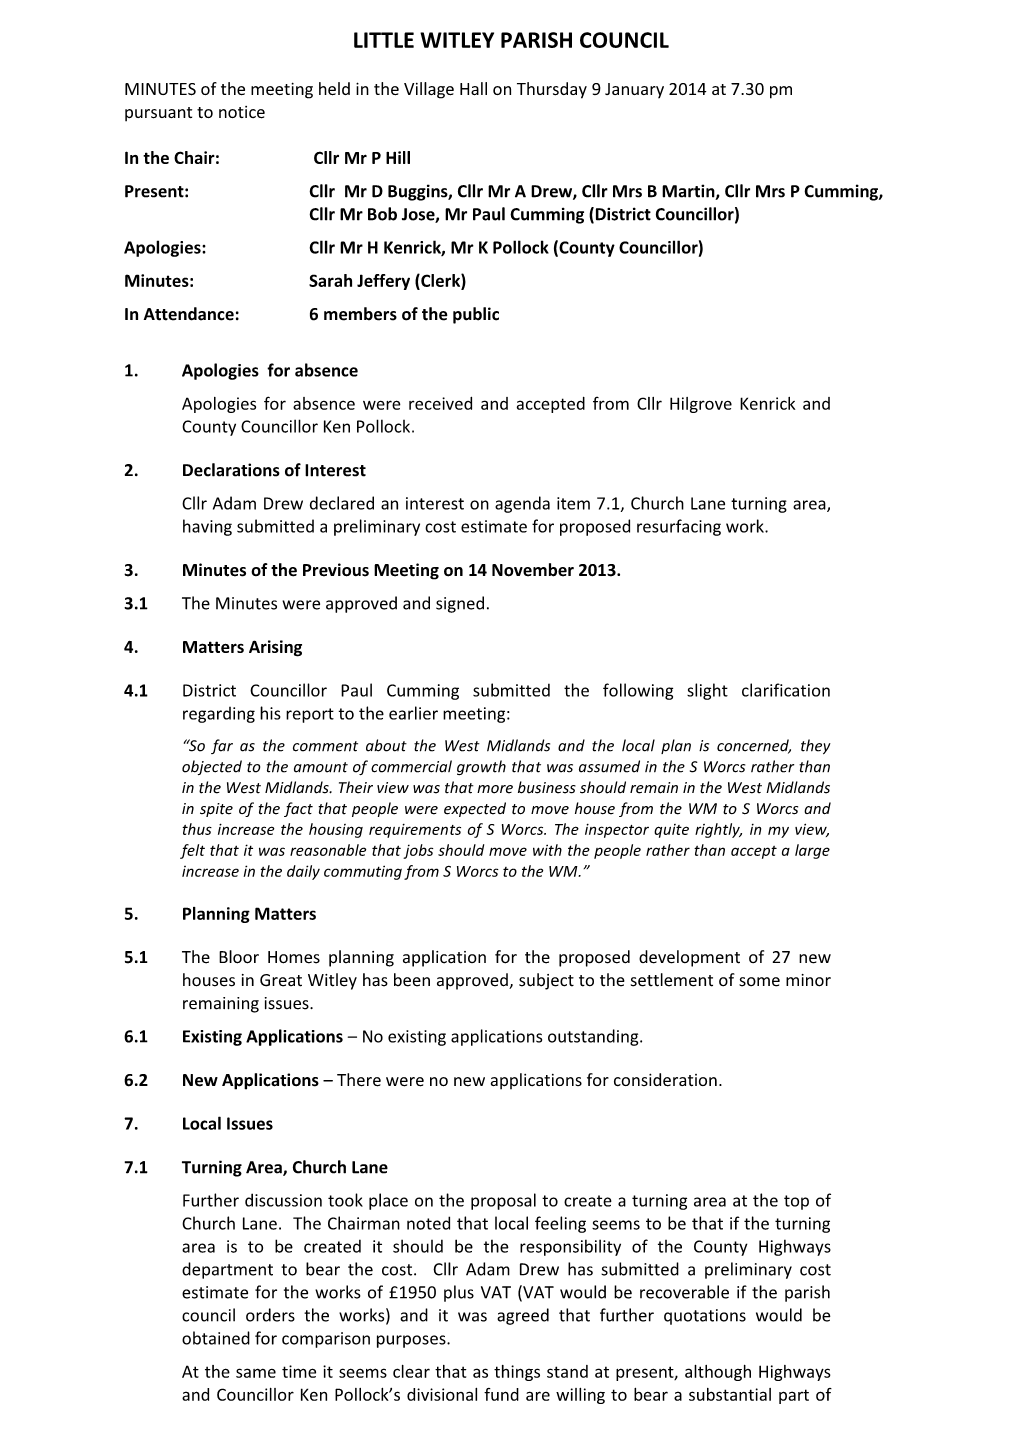 Little Witley Parish Council Draft Minutes